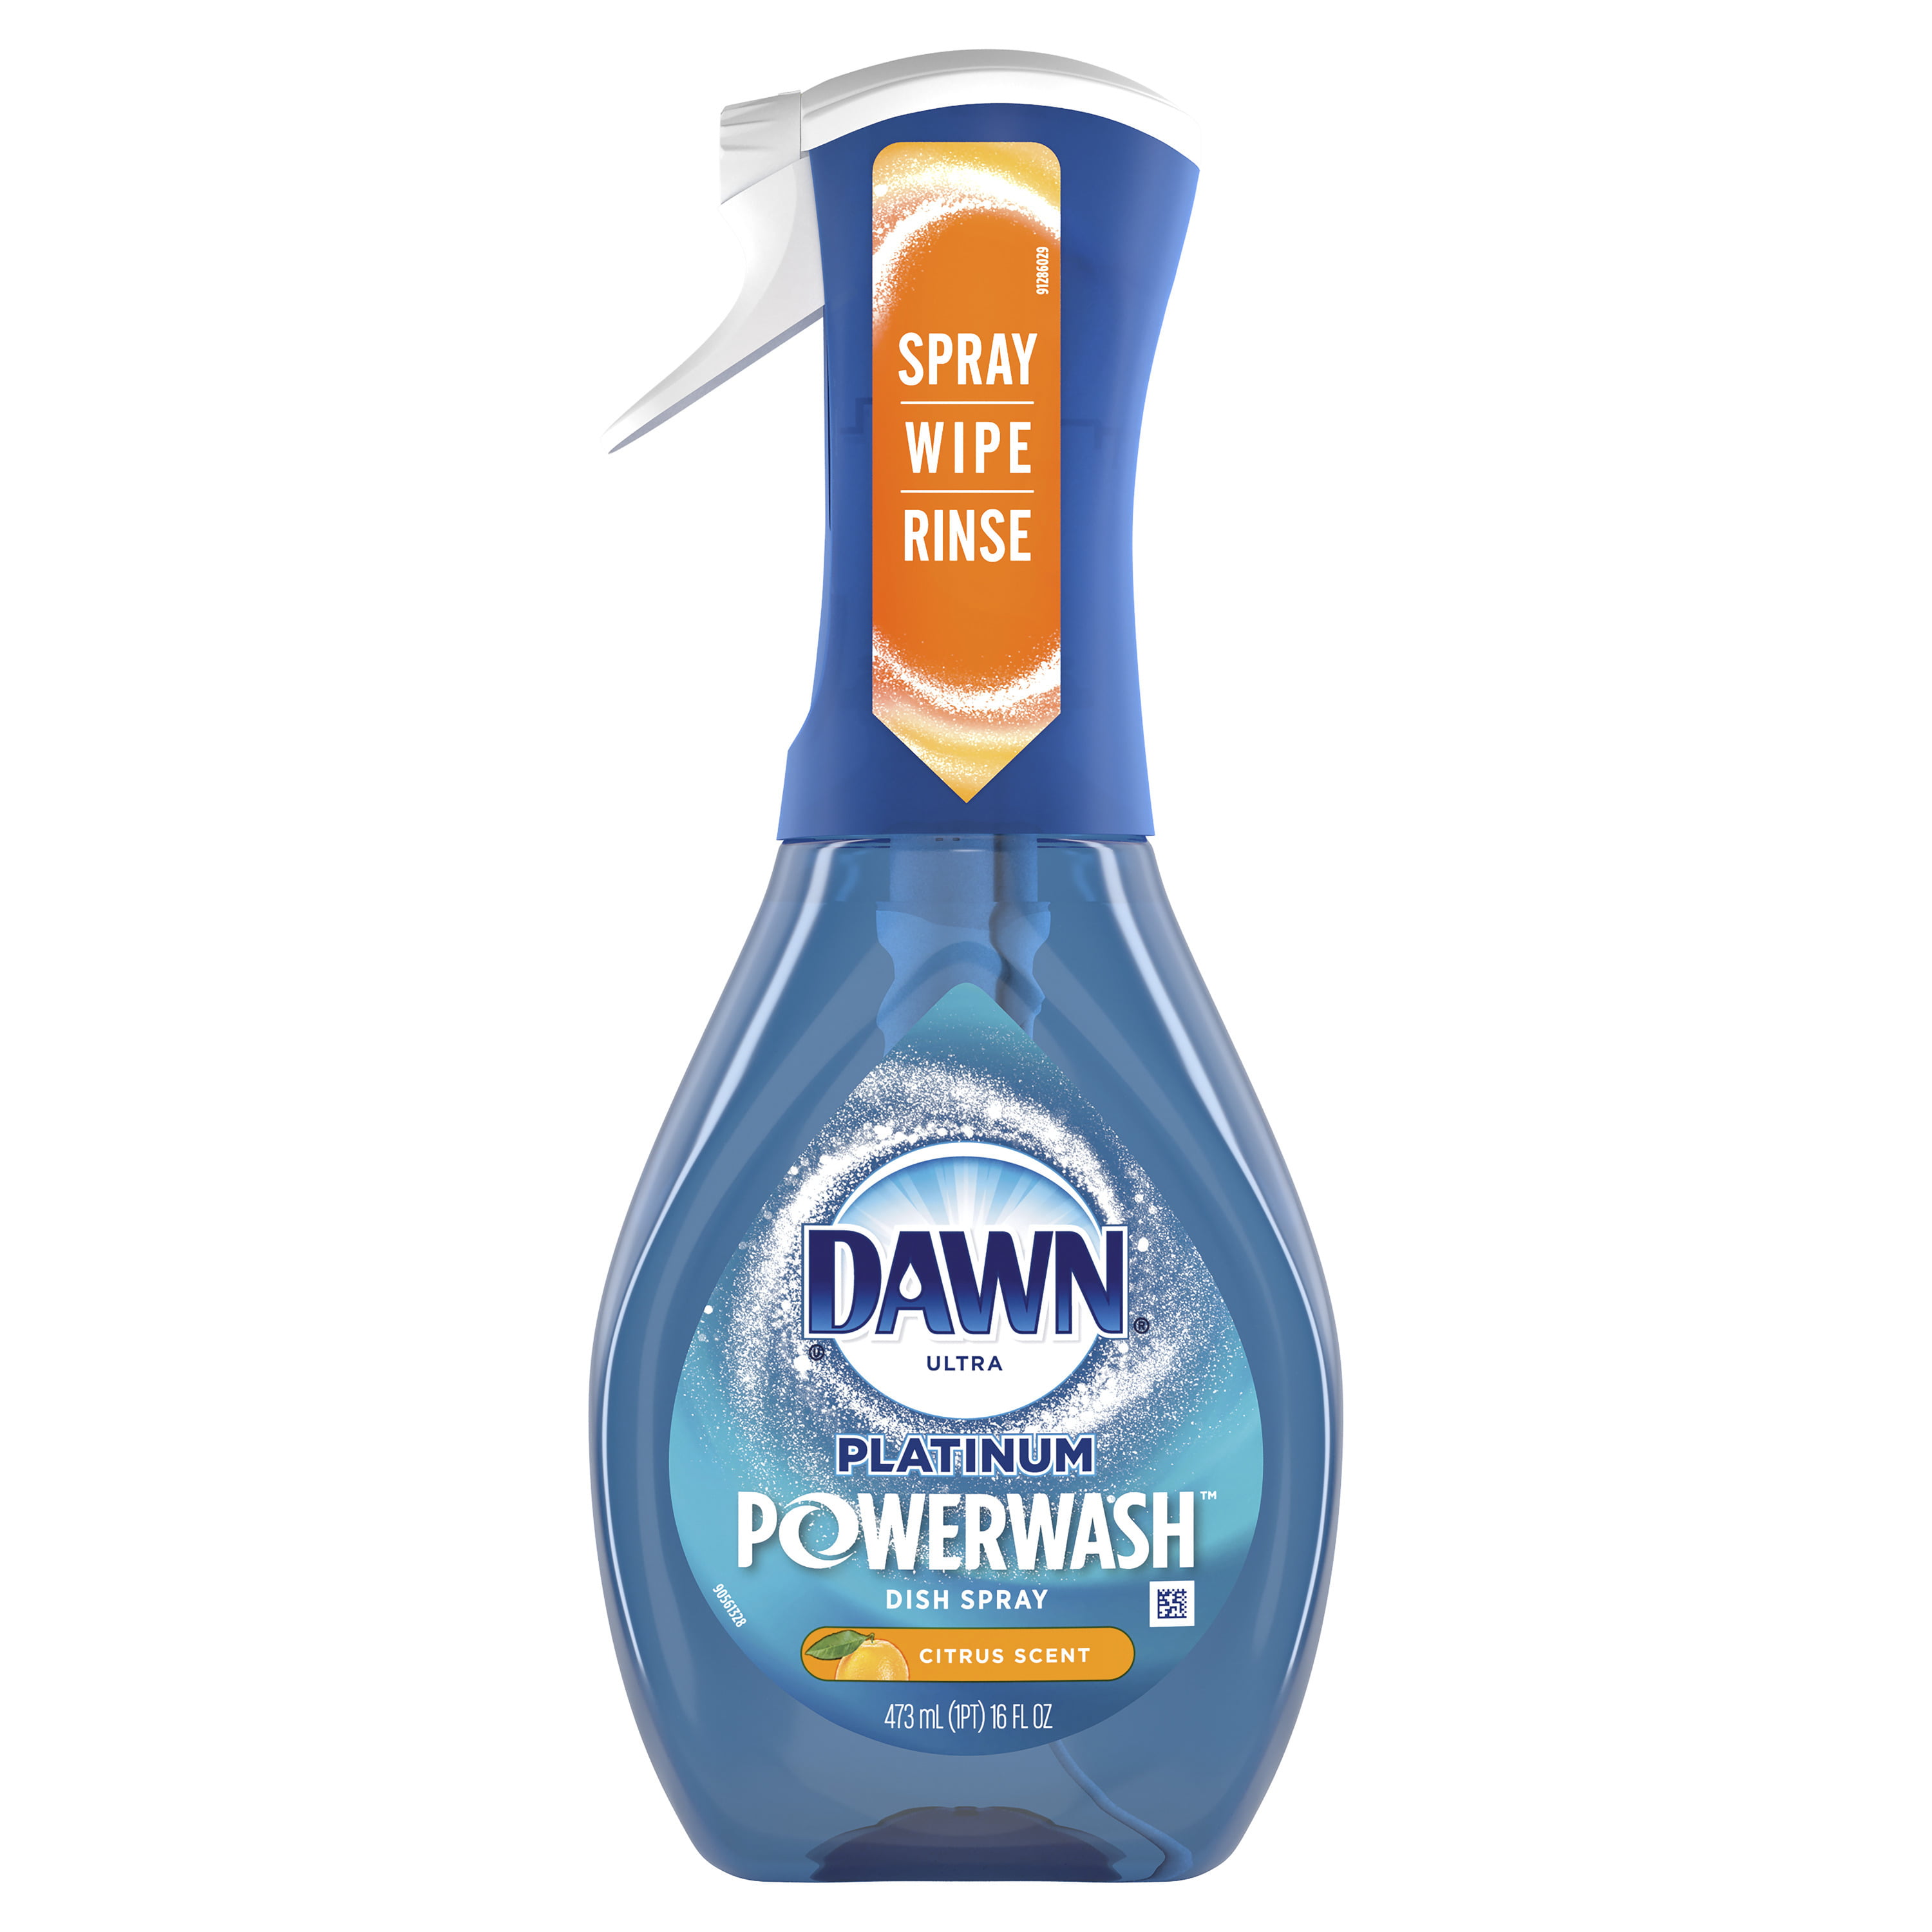 How To Make Dawn Platinum Powerwash Dish Spray Dawn Platinum Powerwash Dish Spray, Dish Soap, Citrus Scent, 16oz -  Walmart.com